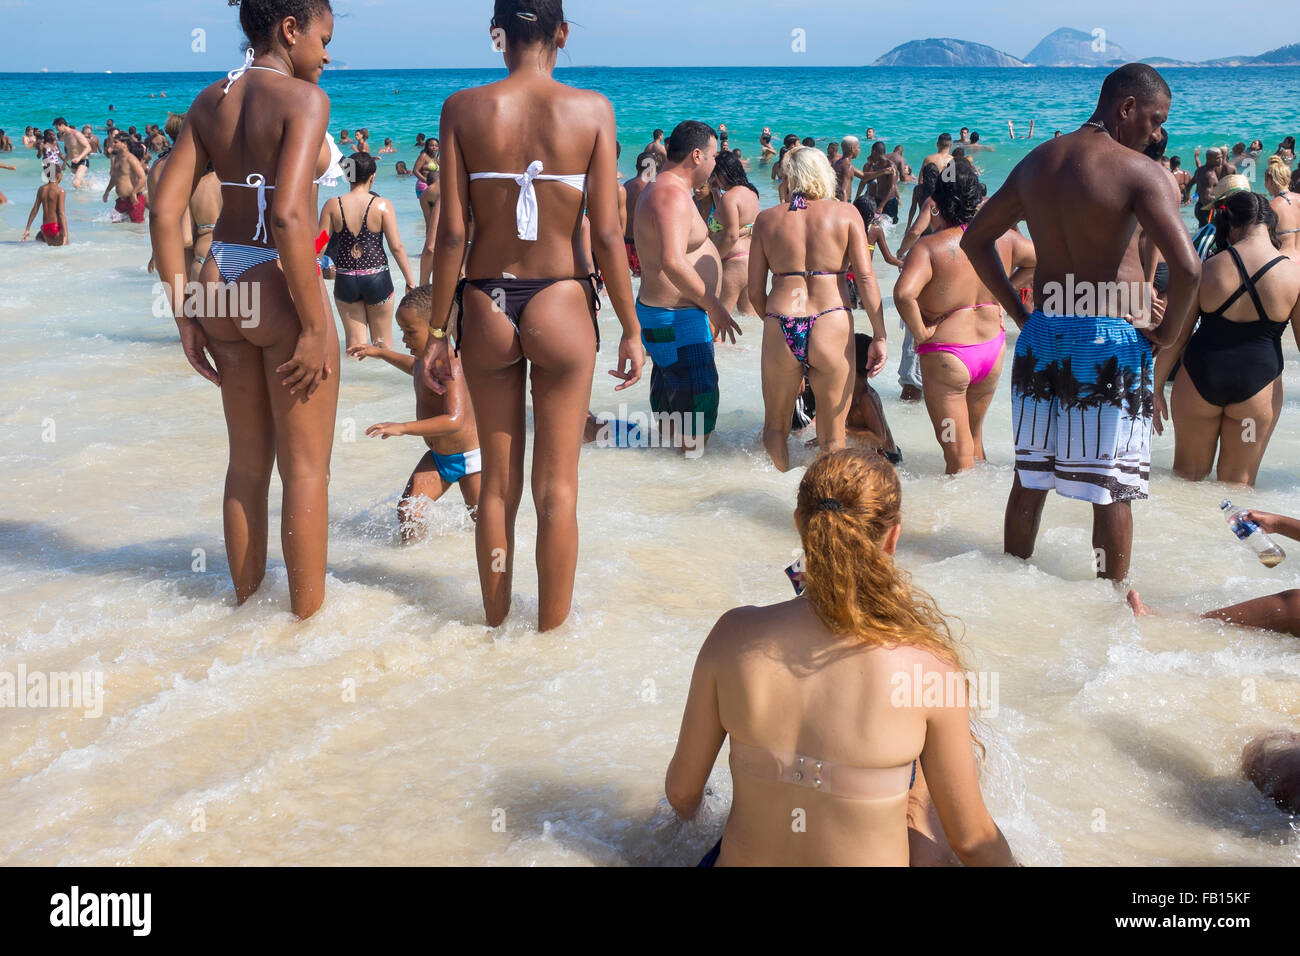 Beach brazil bikini hi-res stock photography and images Sex Image Hq